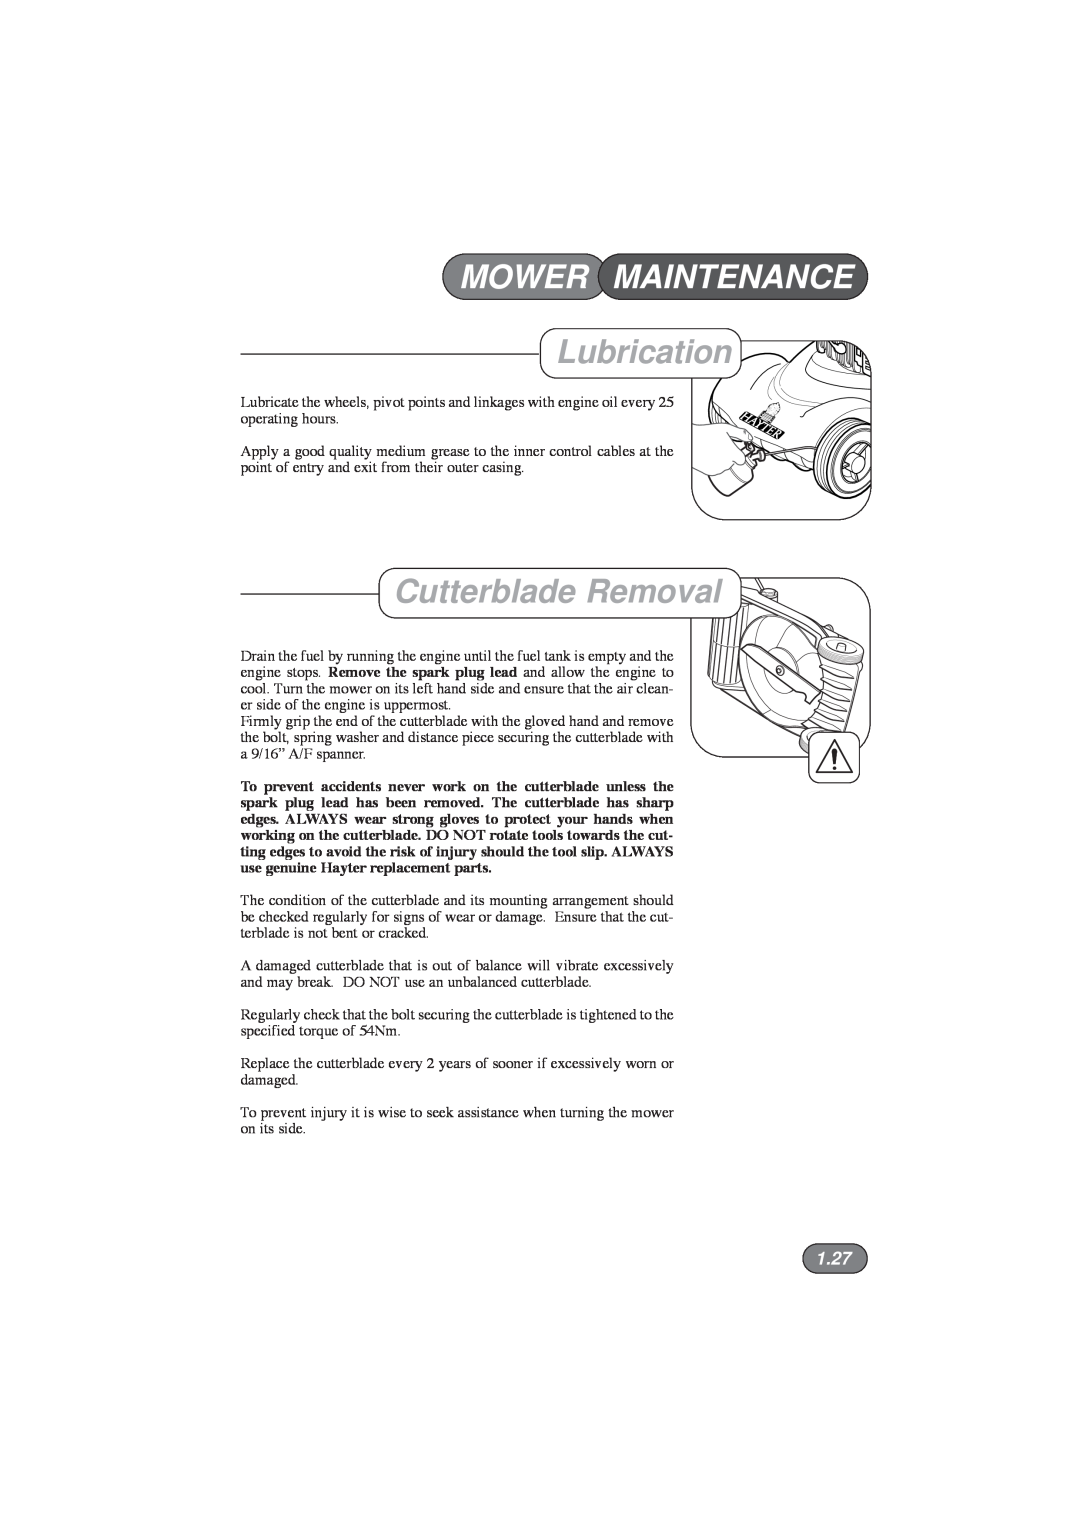 Hayter Mowers 412E, 413E, 410E manual Lubrication, Cutterblade Removal, 1.27, Mower Maintenance 